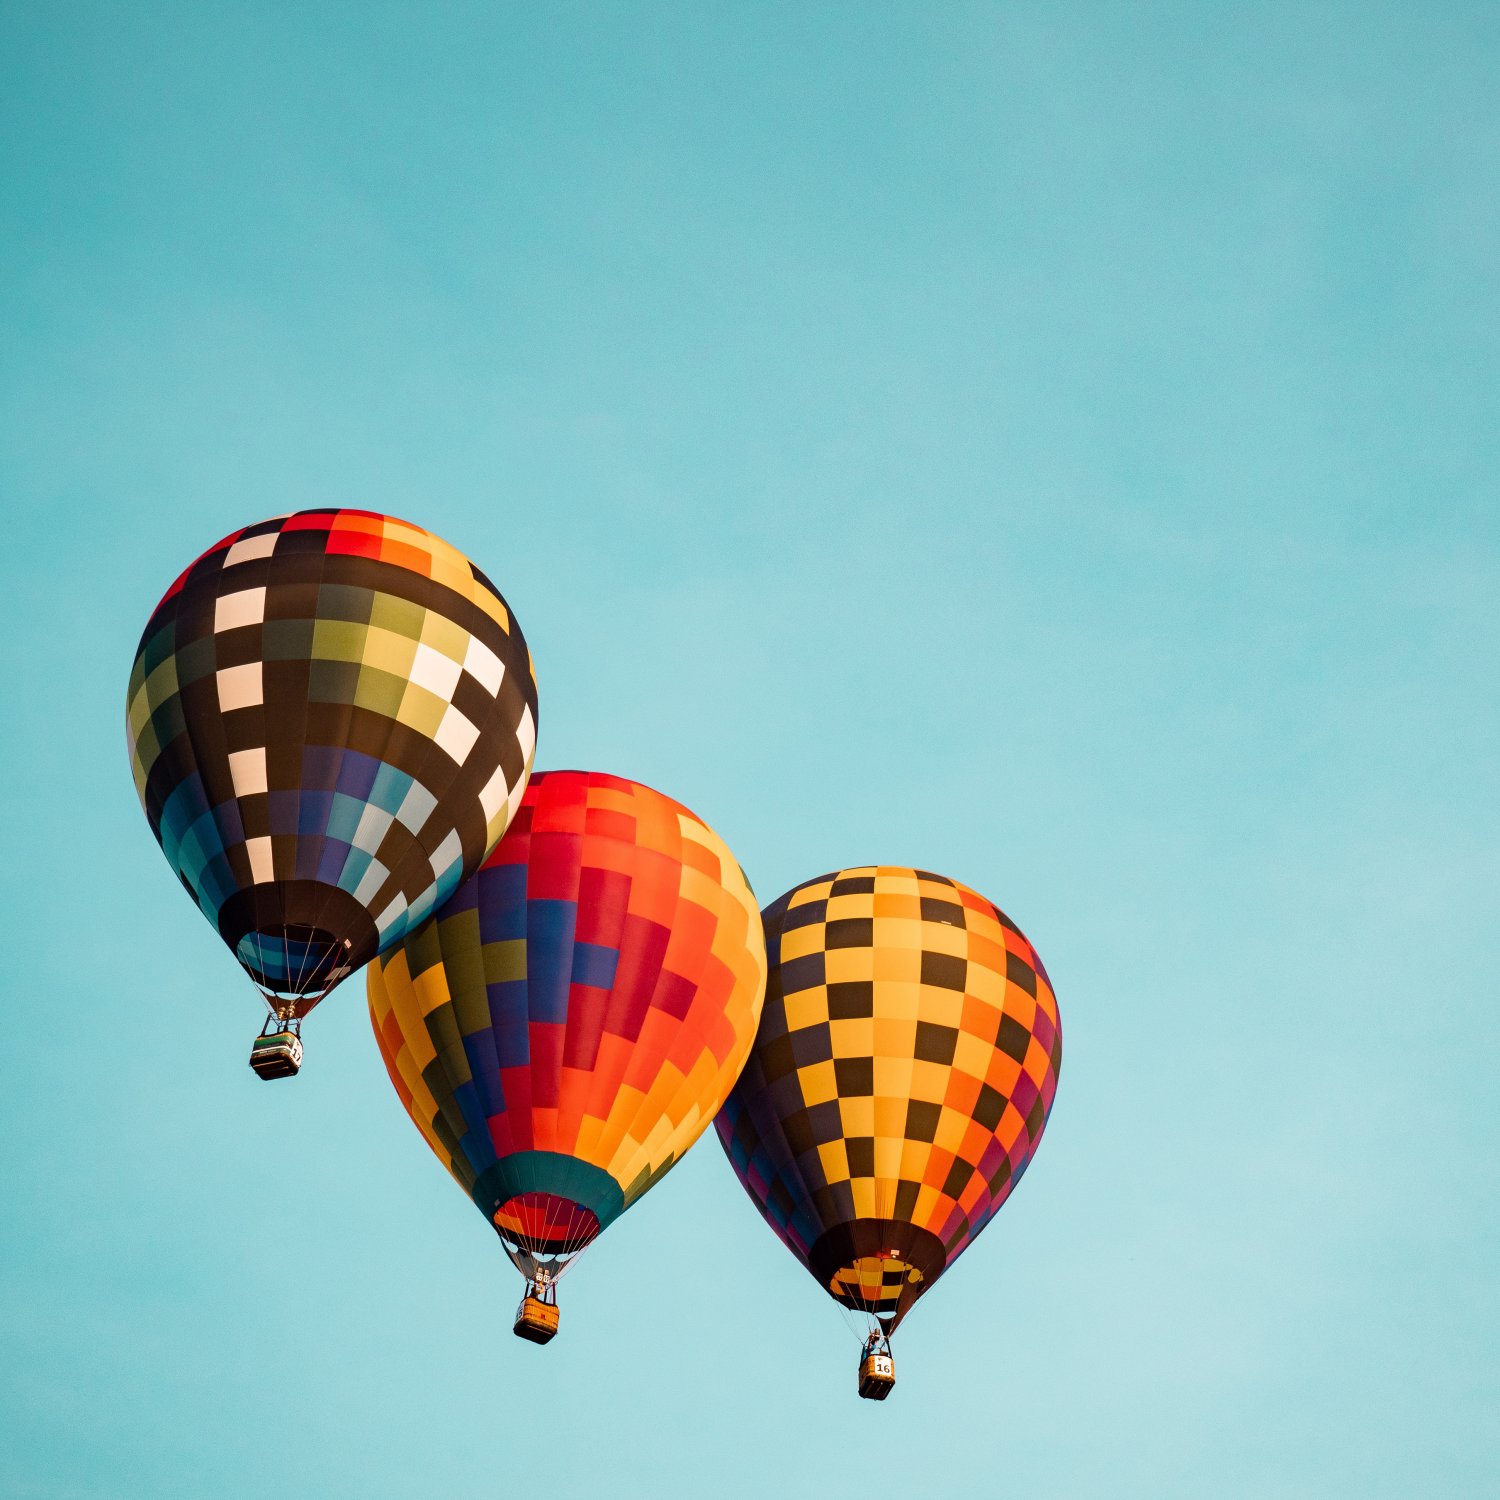 Three hot air balloons ascending